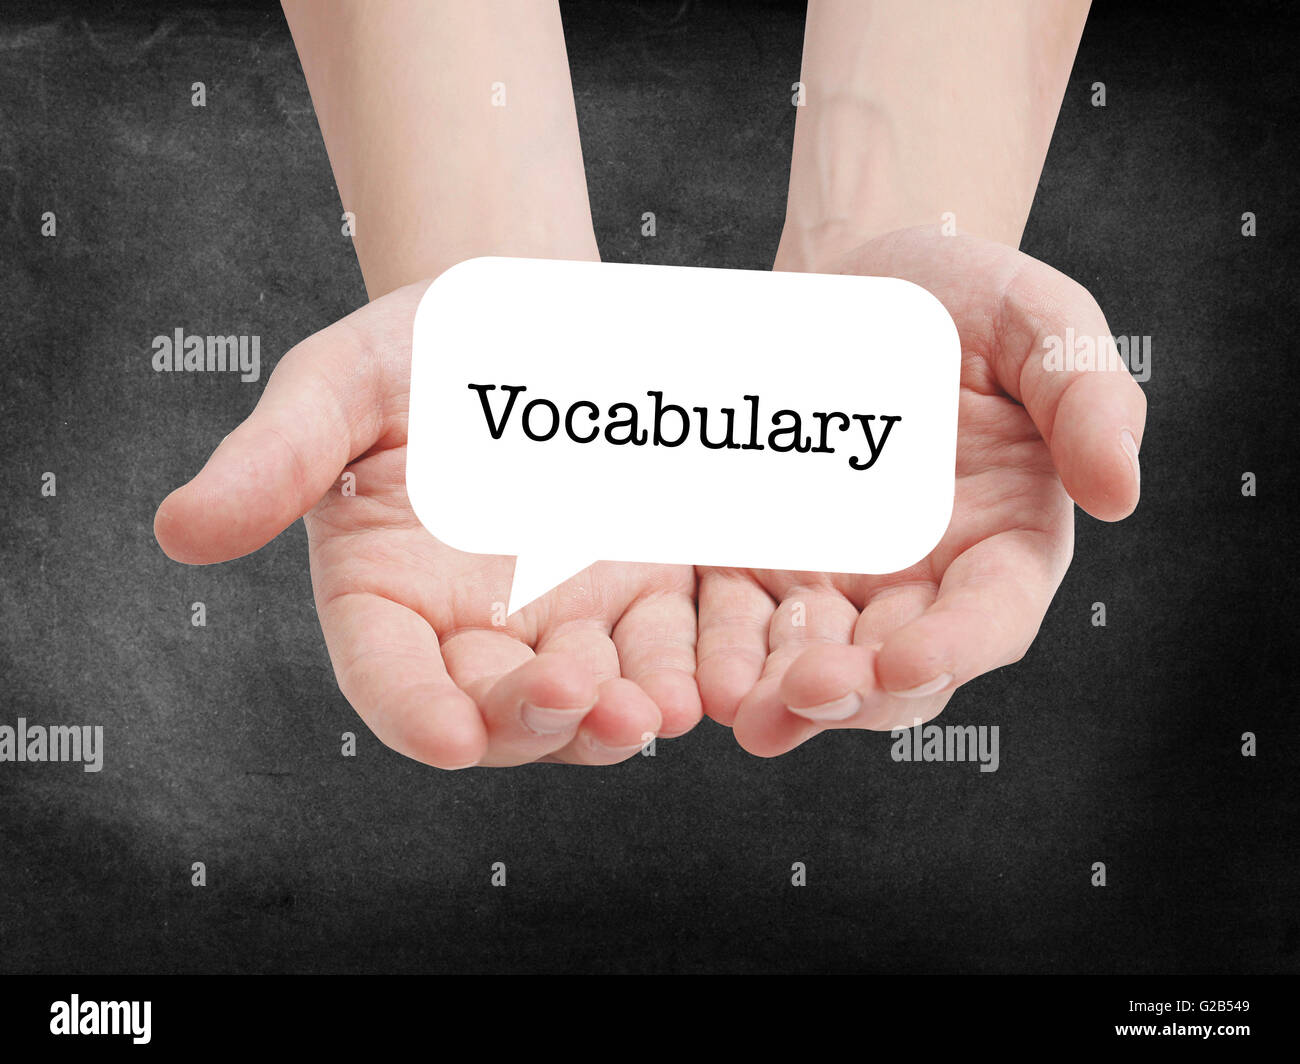 Vocabulary written on a speechbubble Stock Photo